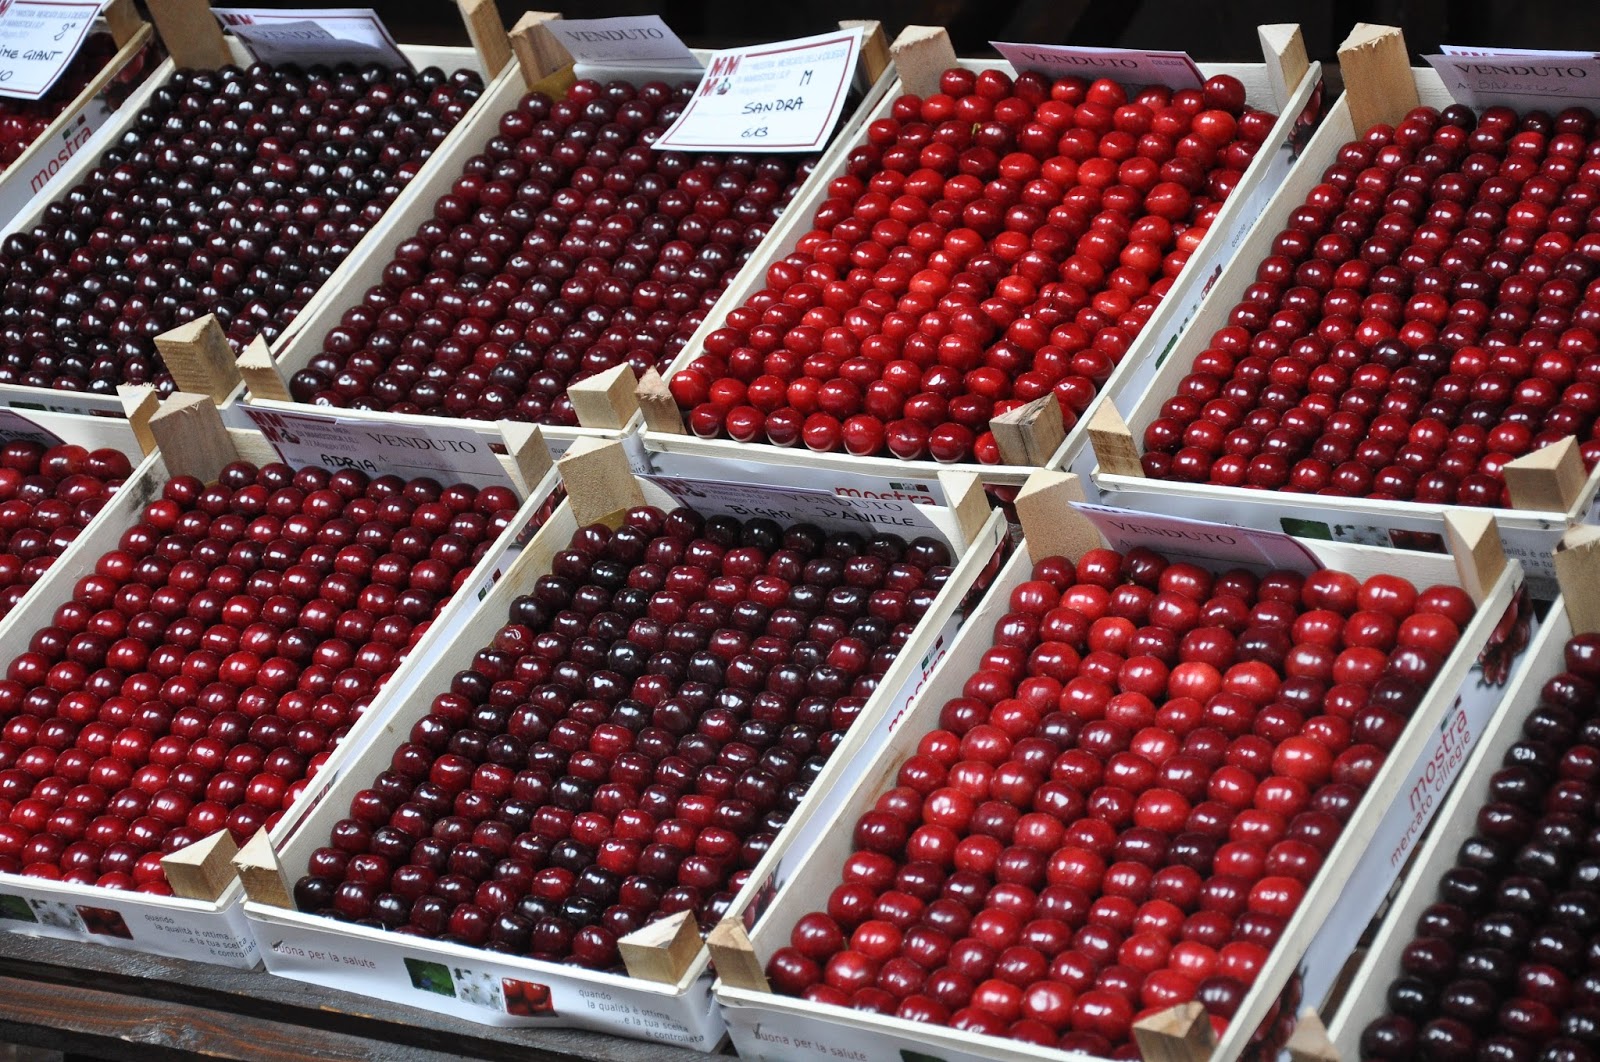 Crates of Premier Cherries, Cherry Show Market, Marostica, Veneto, Italy